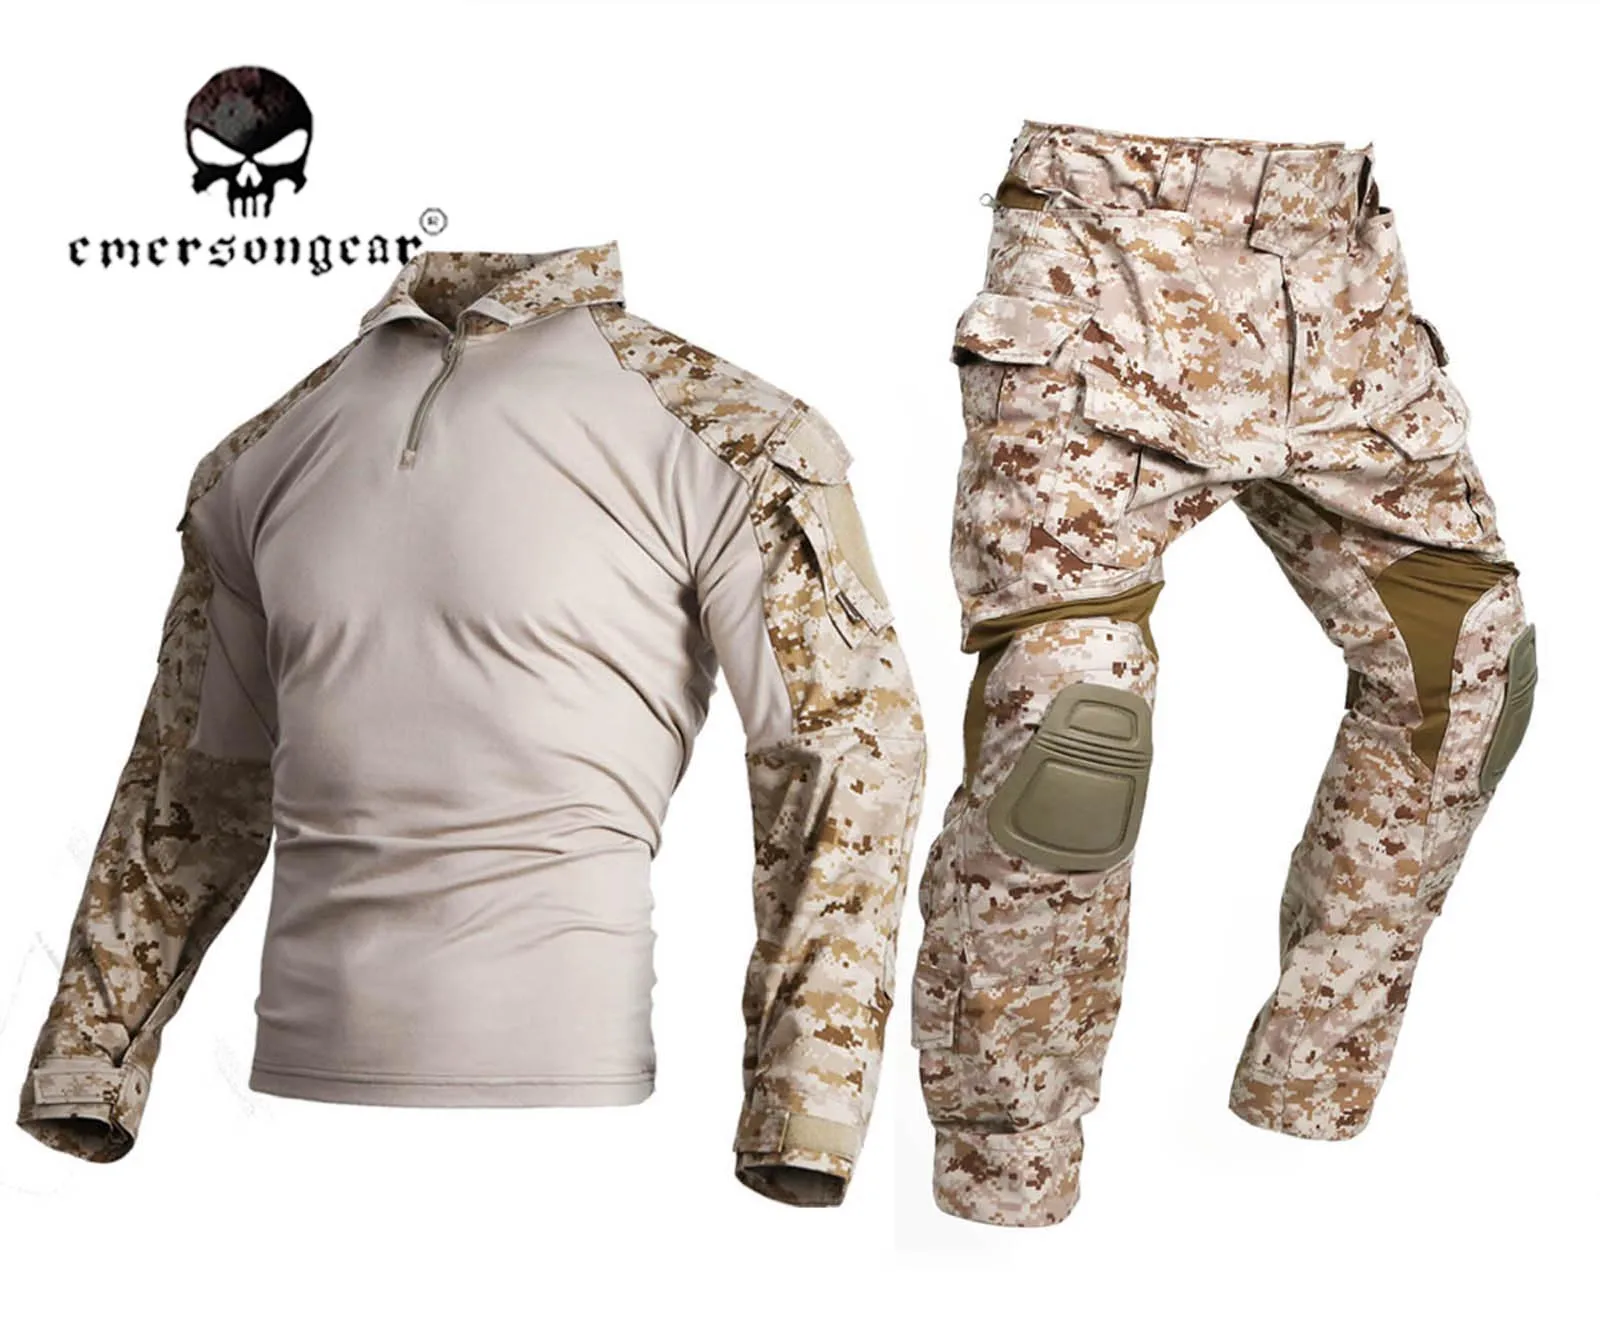  Emerson Airsoft Tactical BDU Traje Militar Combat Gen3 Uniforme  Camisa Pantalones : Deportes y Actividades al Aire Libre